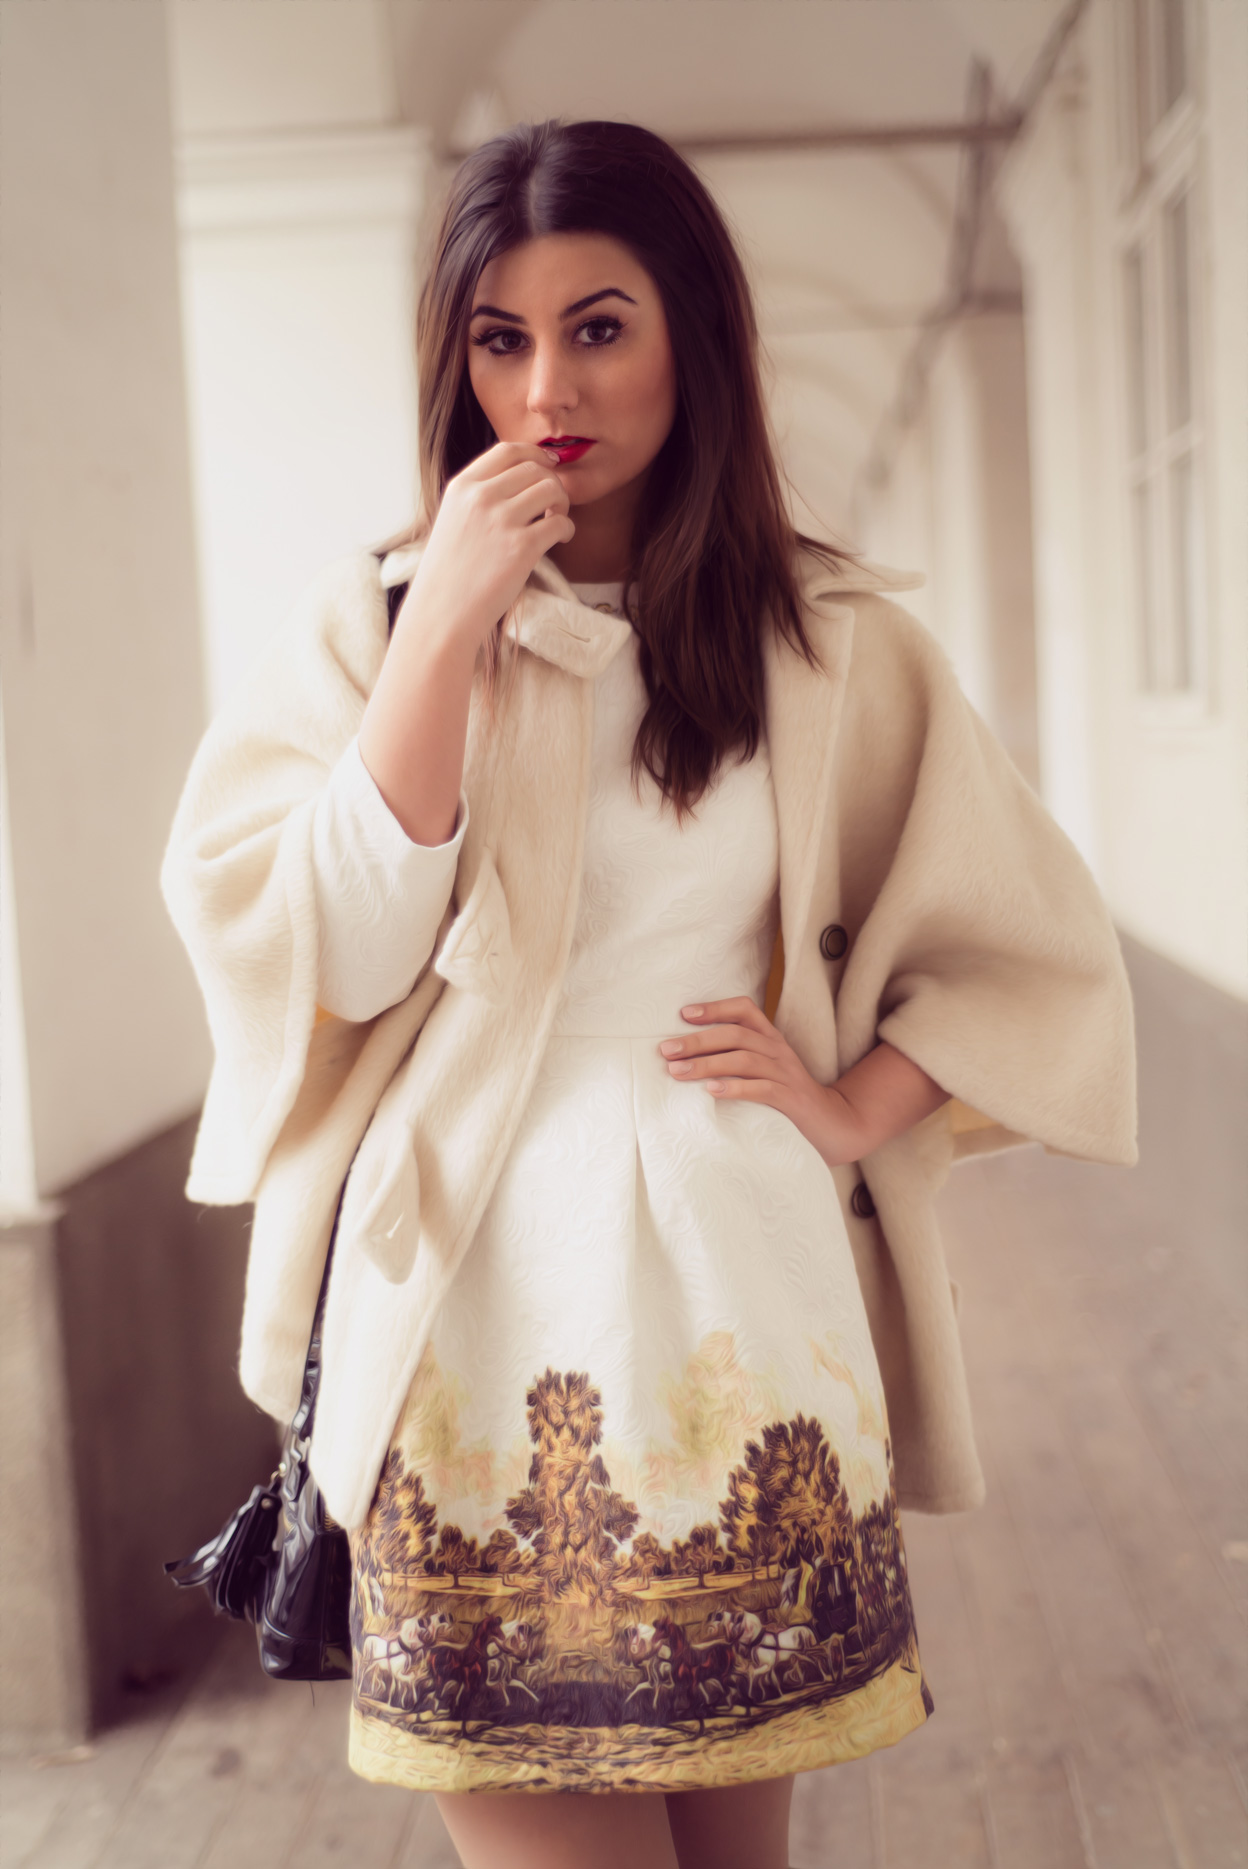 tinuta eleganta de valentine's day rochia alba iulia andrei fashion blog 